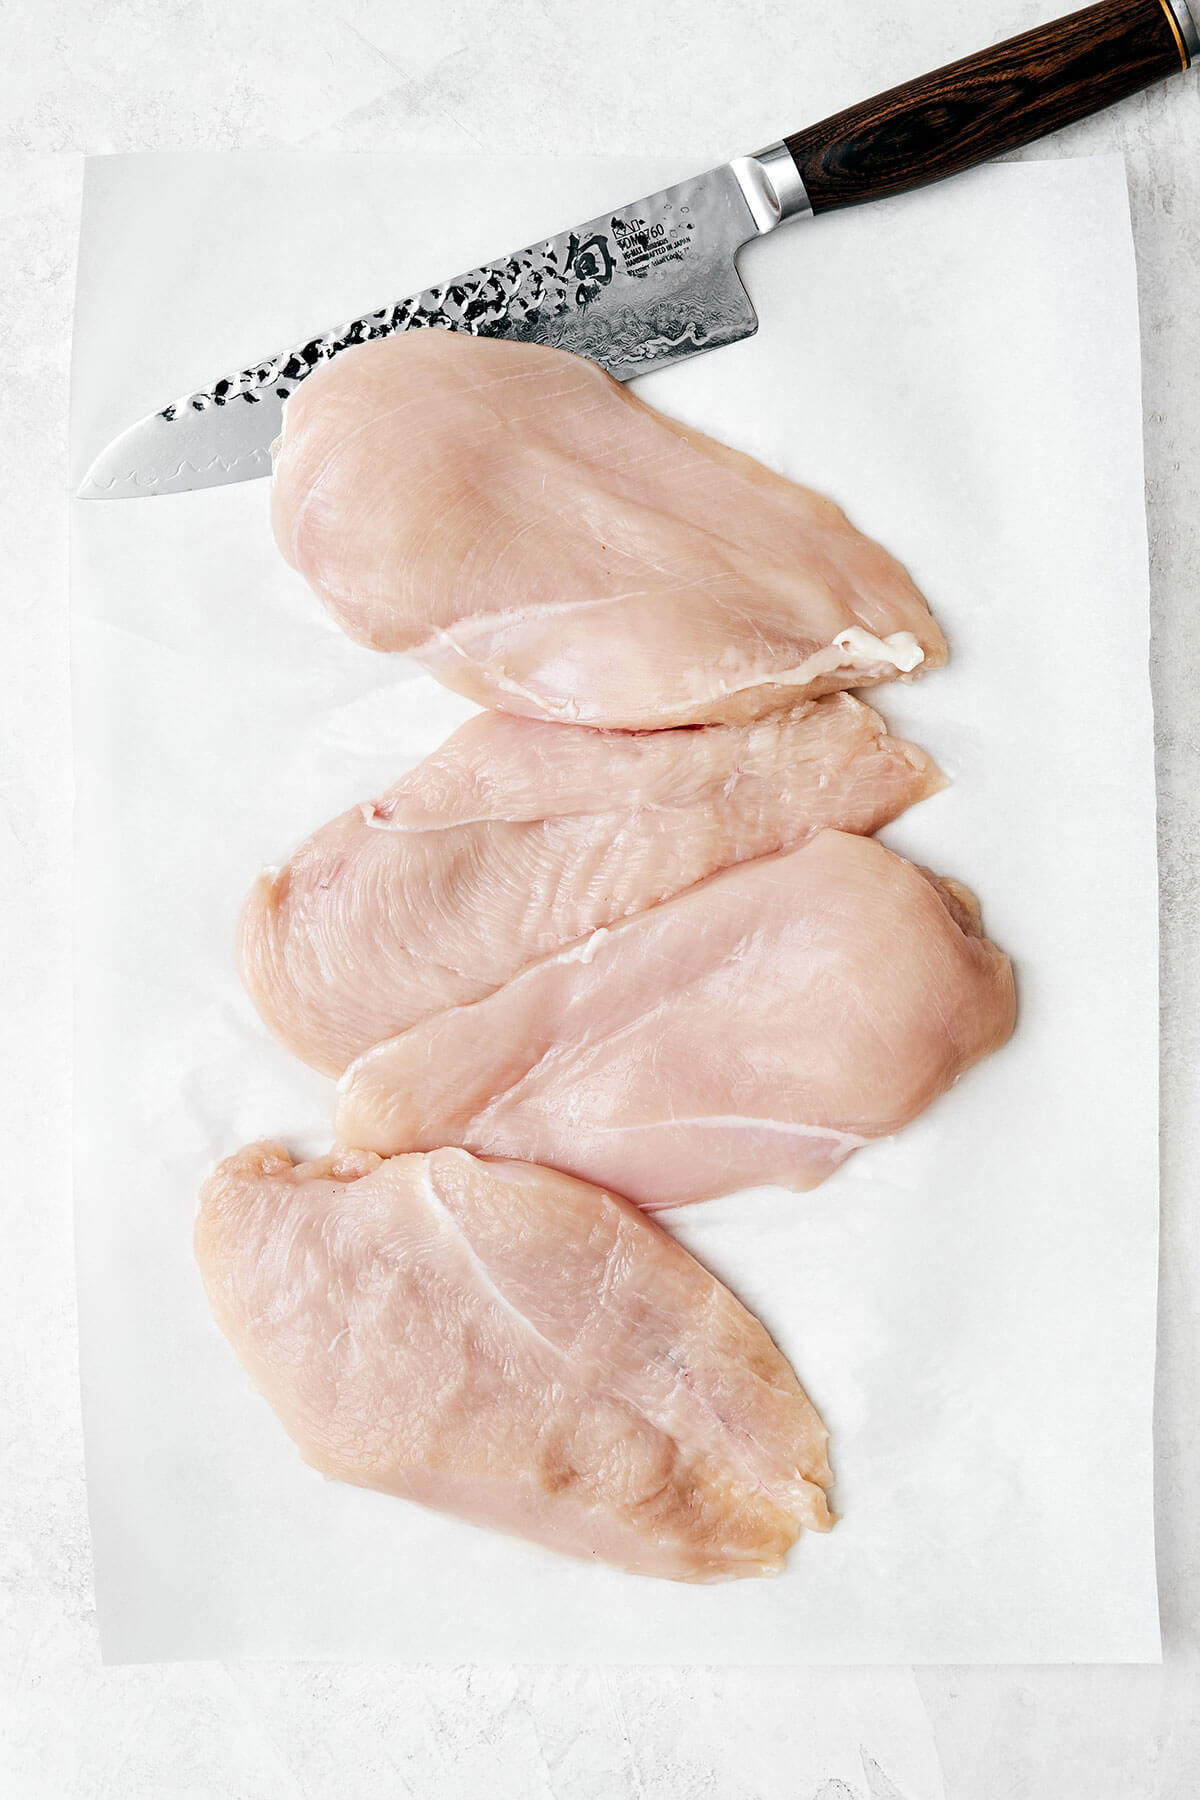 Sliced chicken breasts for chicken piccata